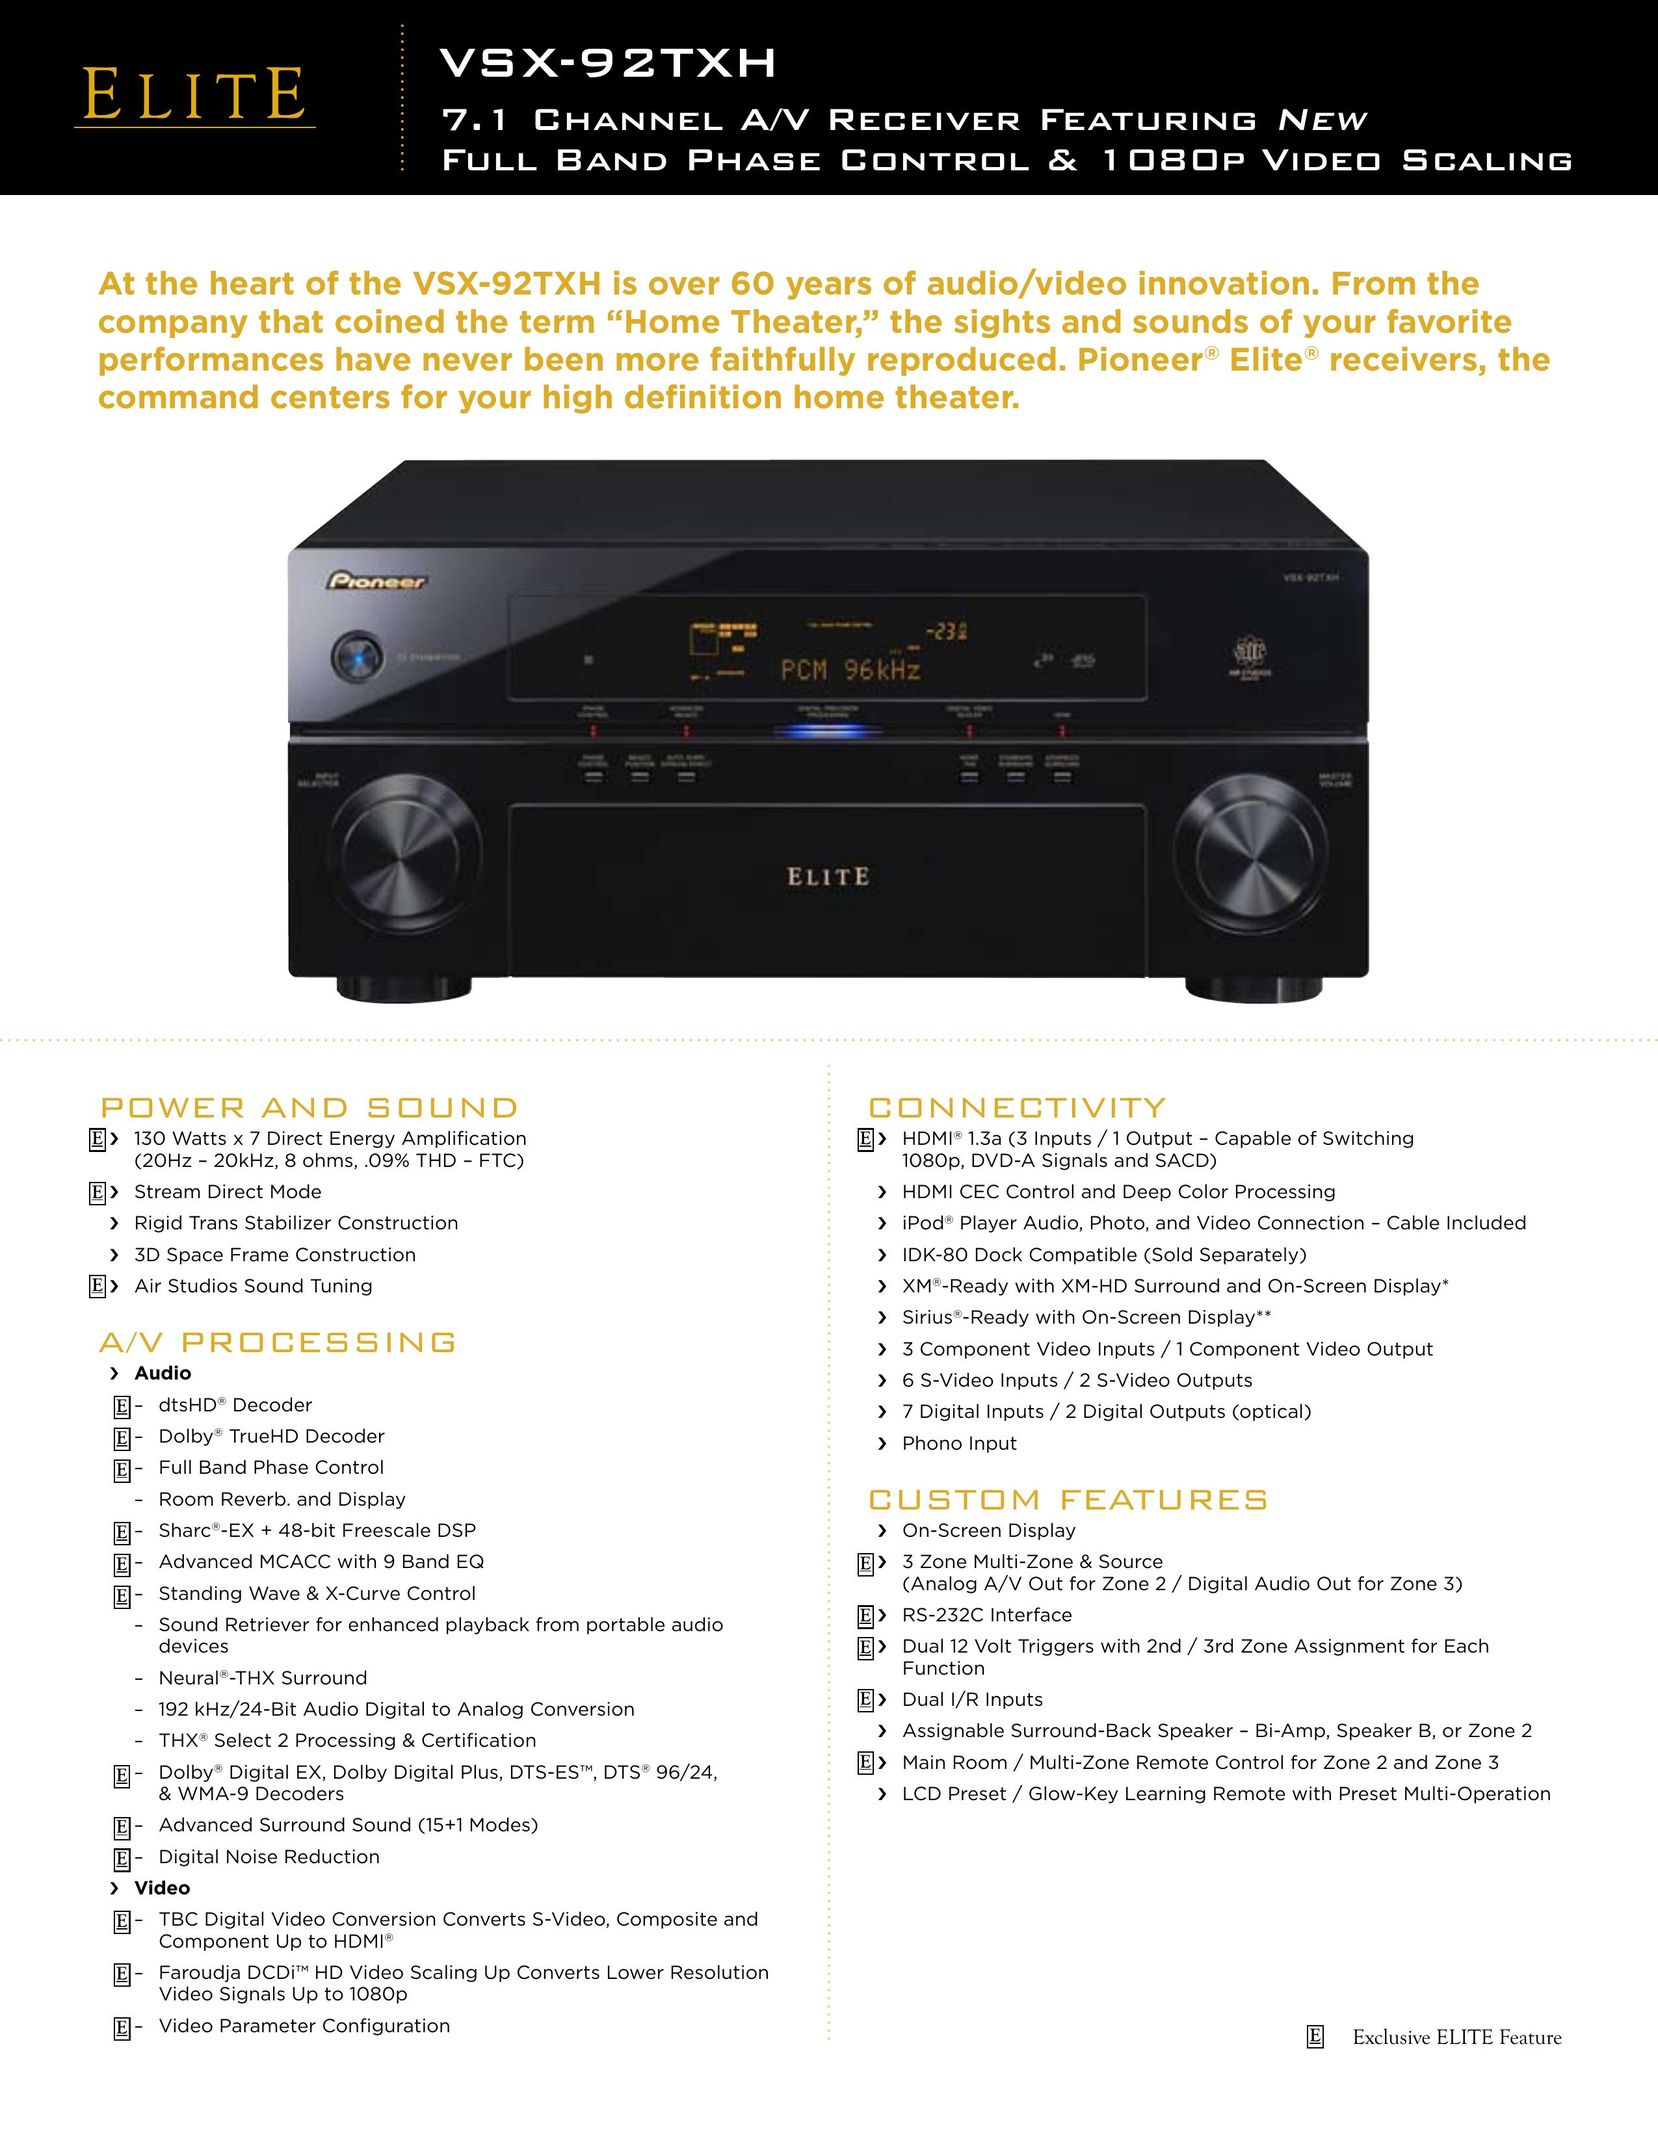 Elite VSX-92TXH Stereo Receiver User Manual (Page 1)